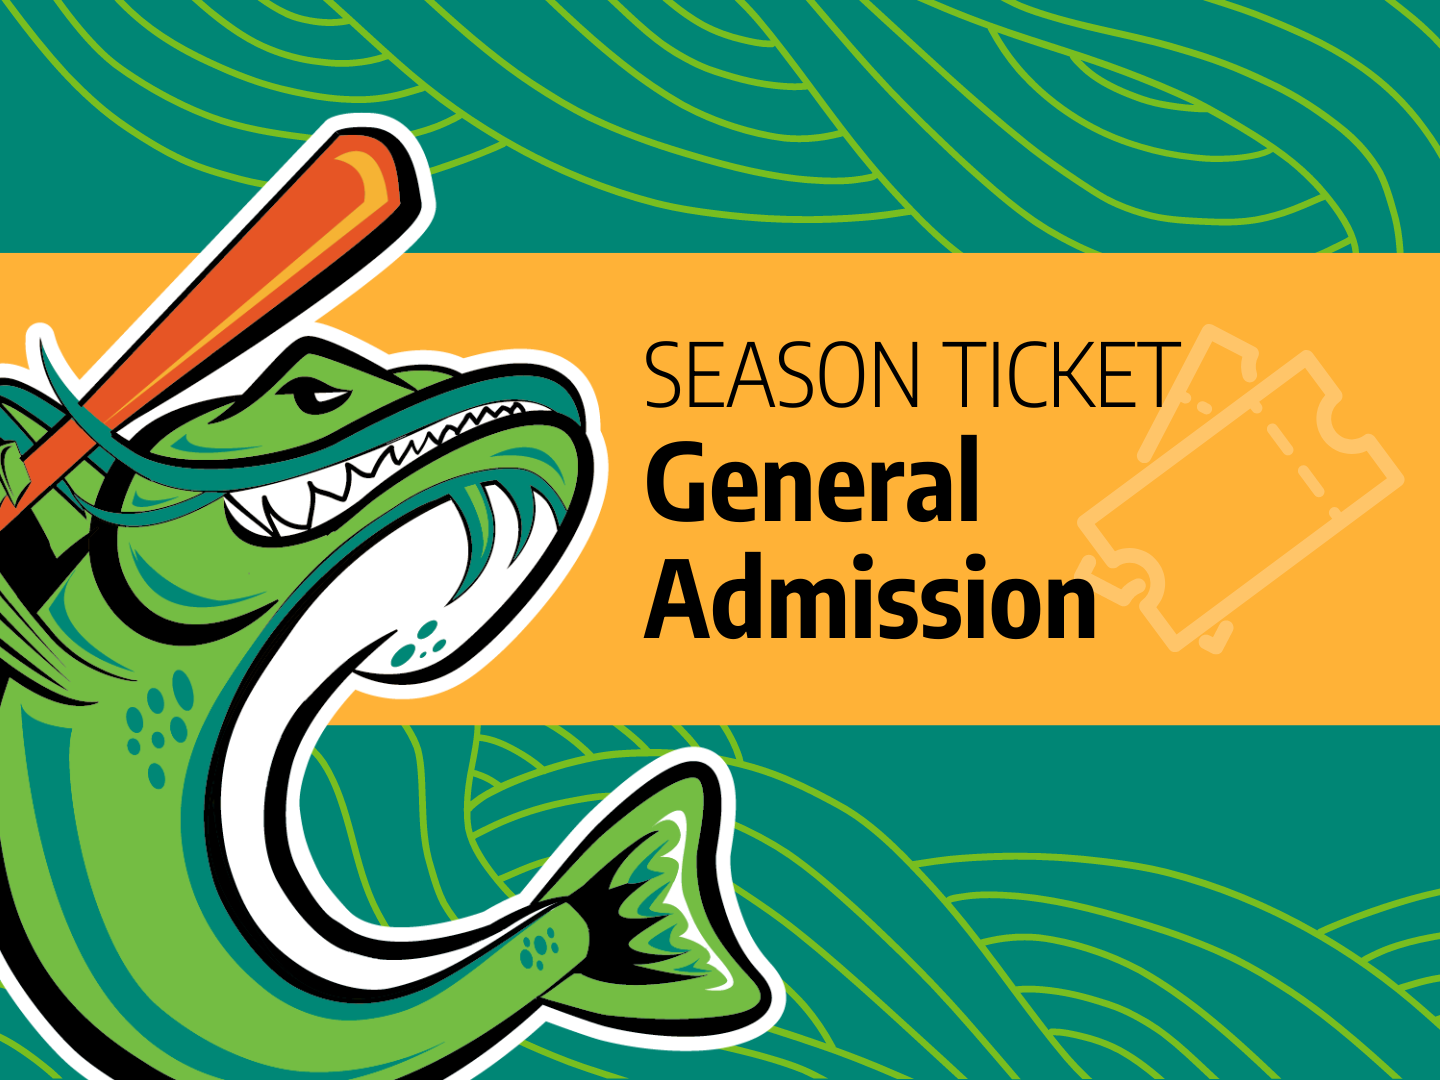 General Admission Season Ticket